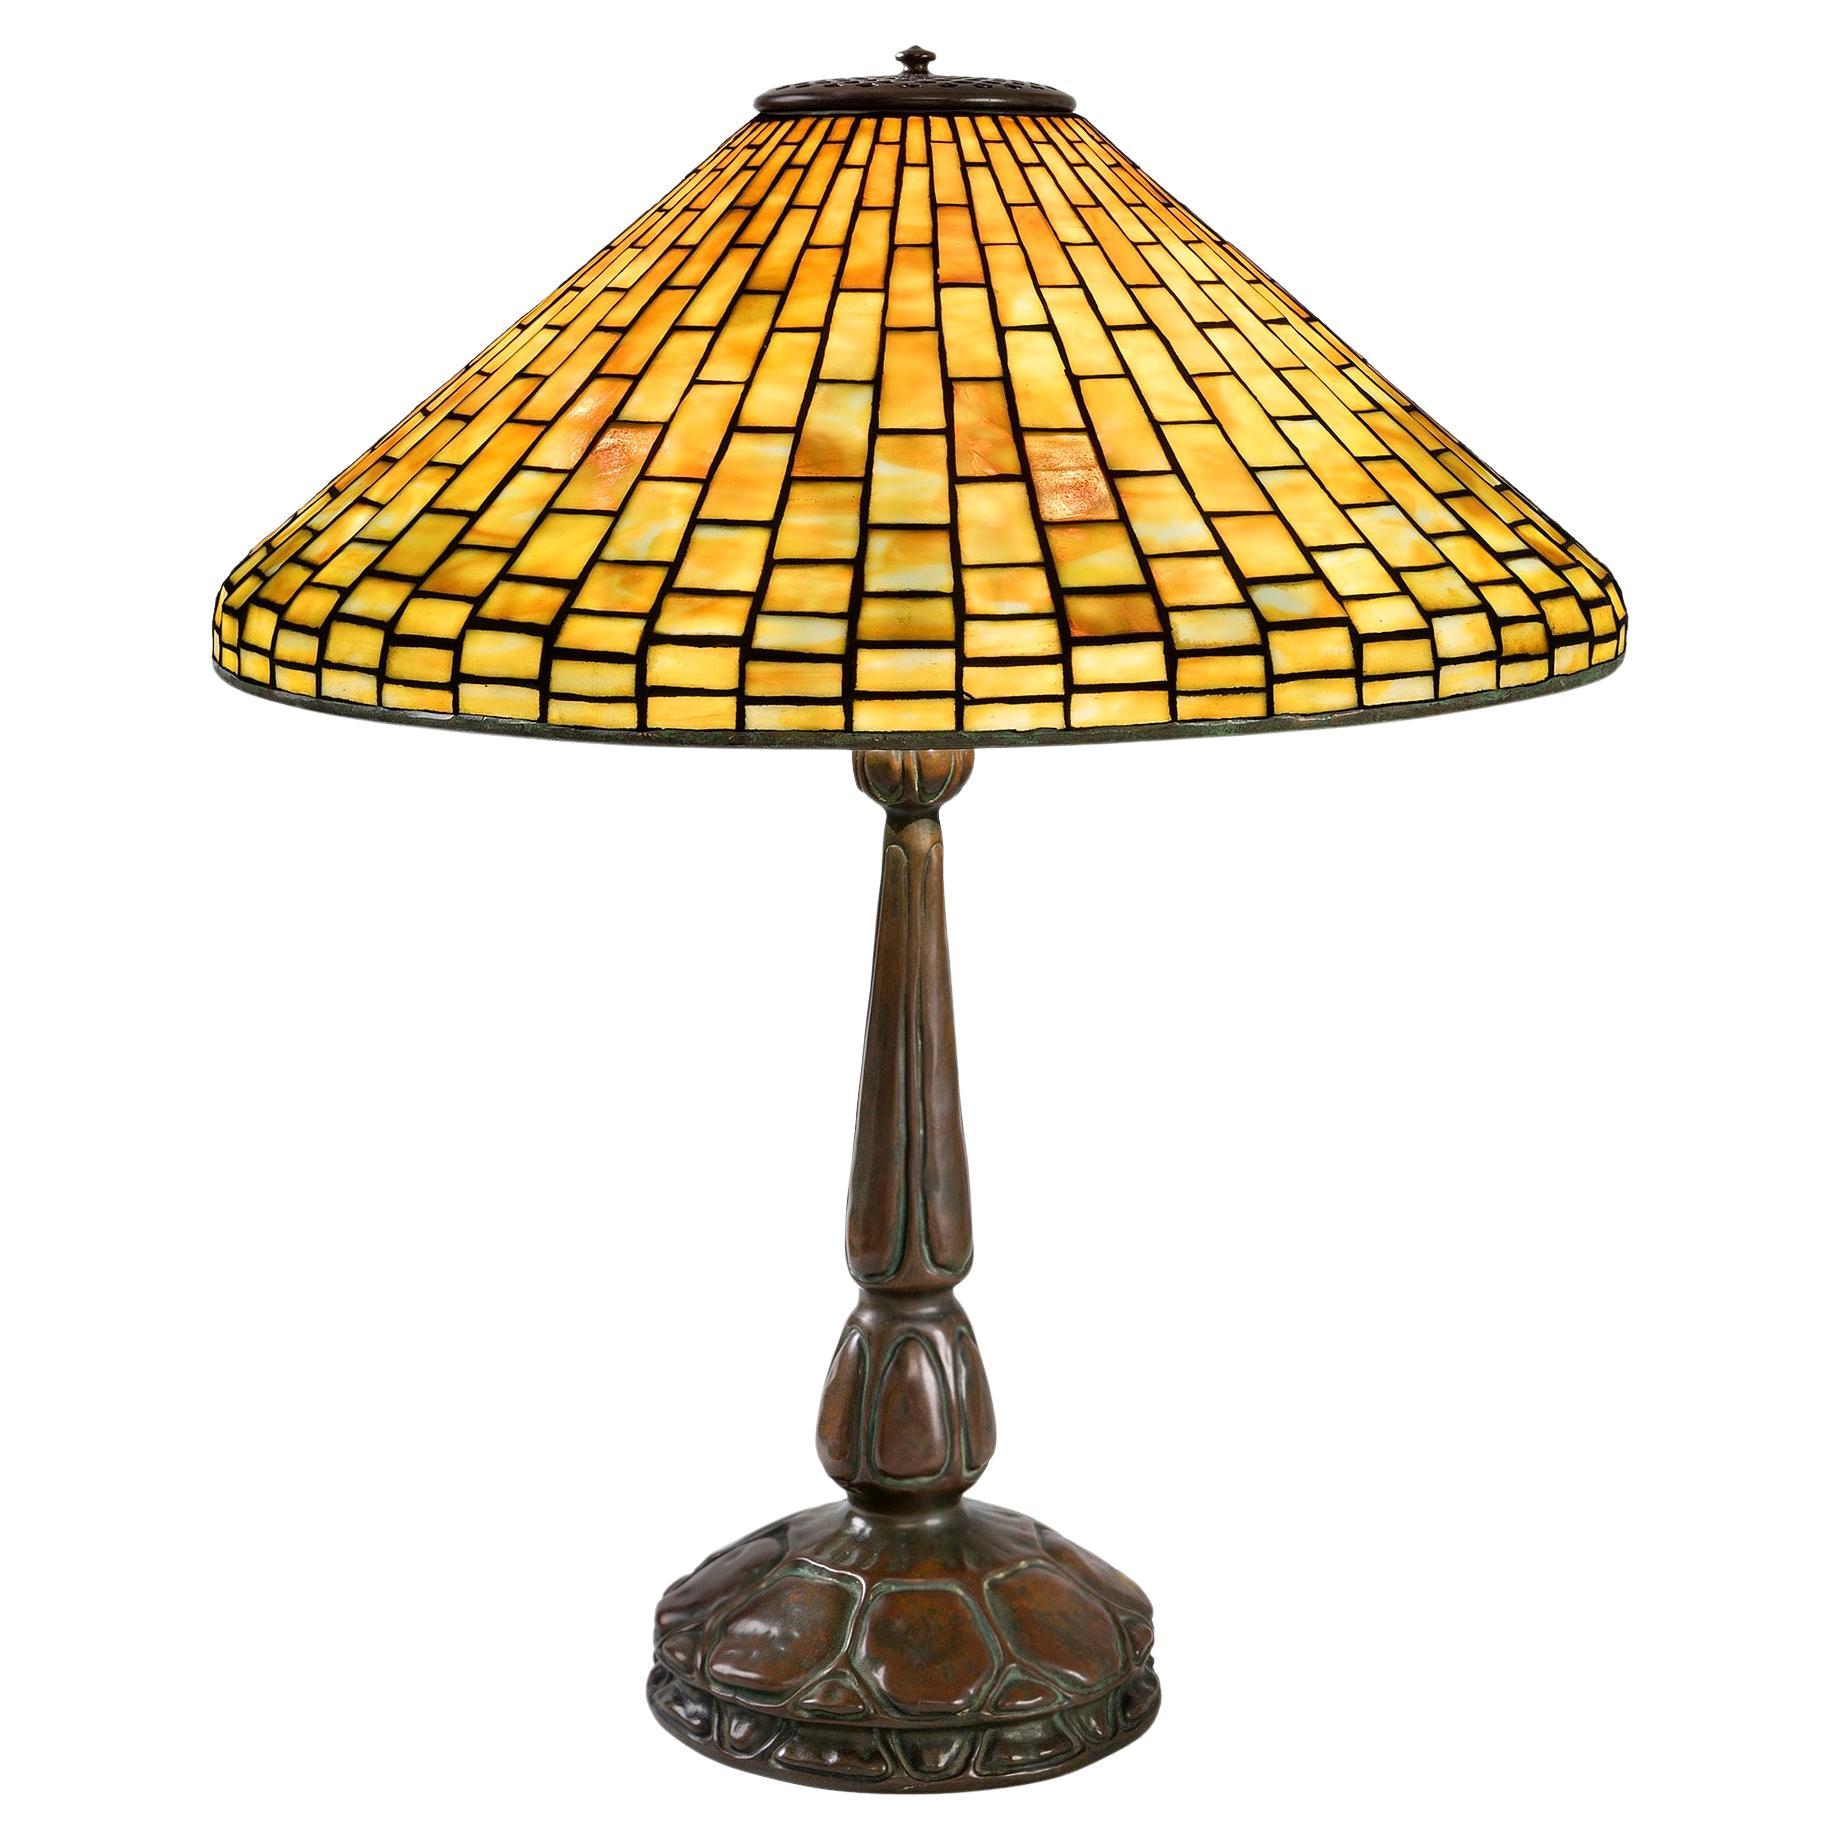 Tiffany Studios New York "Plain Squares" Table Lamp For Sale